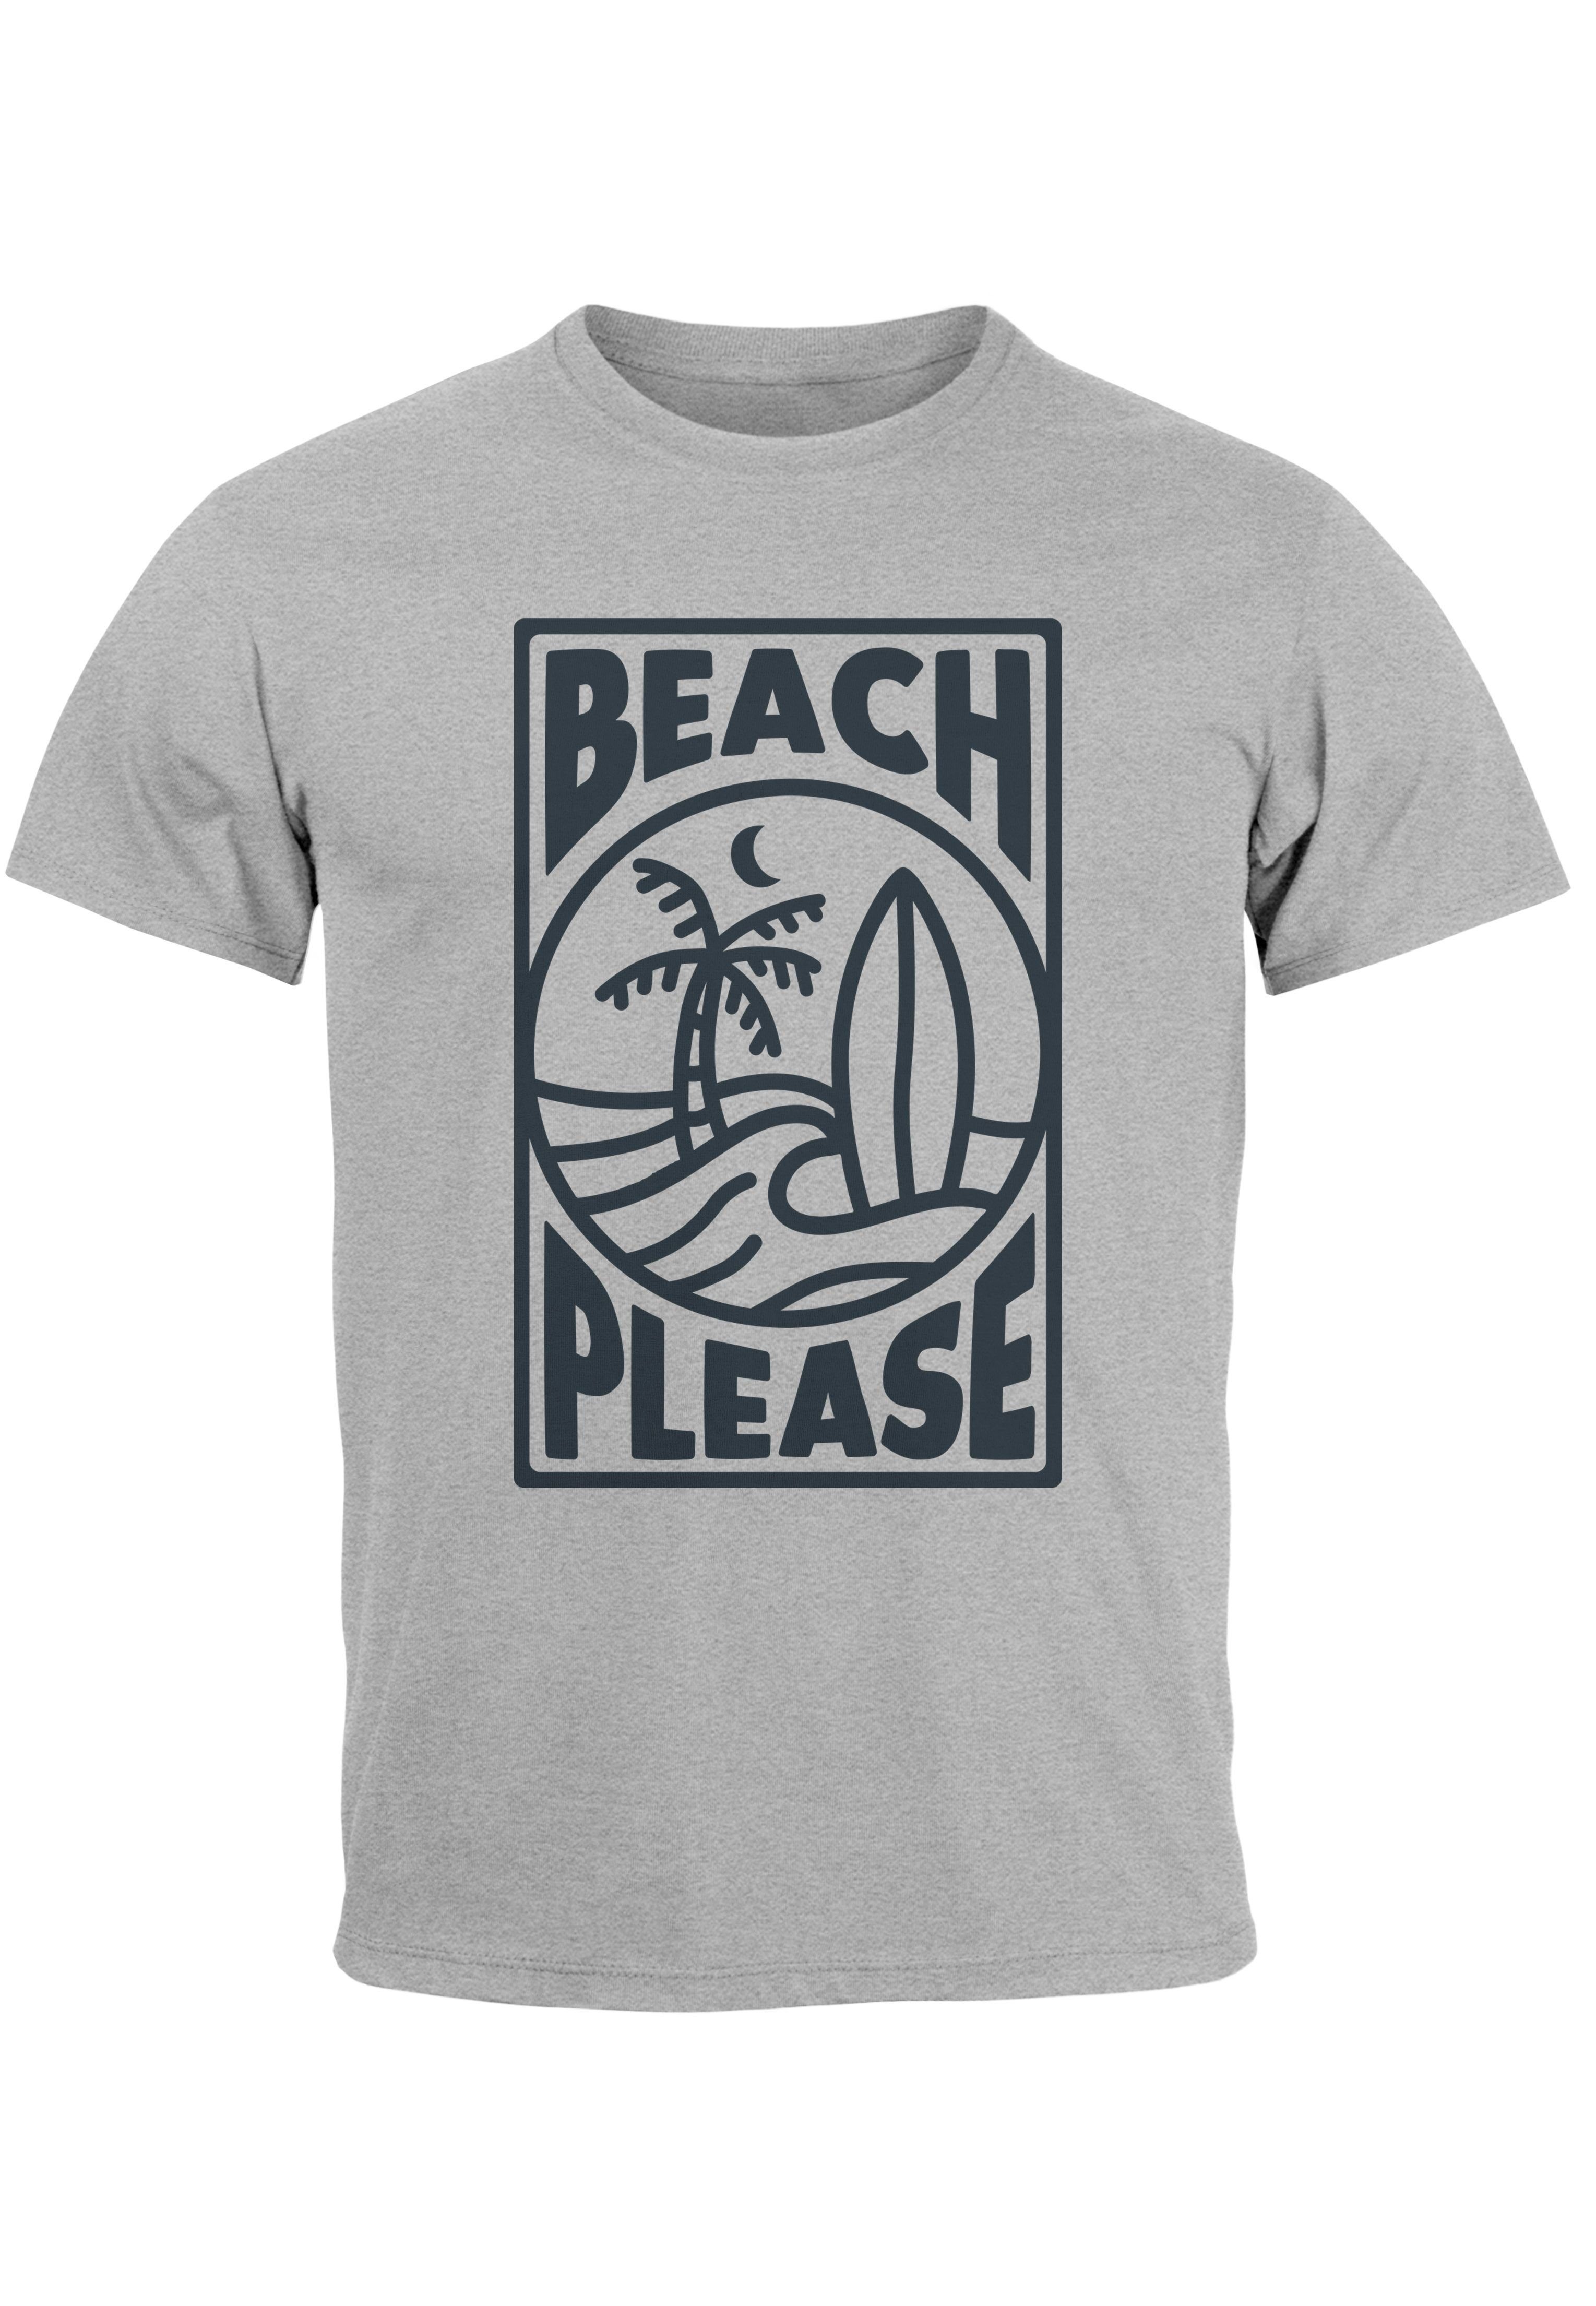 Neverless Print-Shirt Please Welle mit Surfboard Print Beach Wave Print Sommer T-Shirt Surfing Herren grau